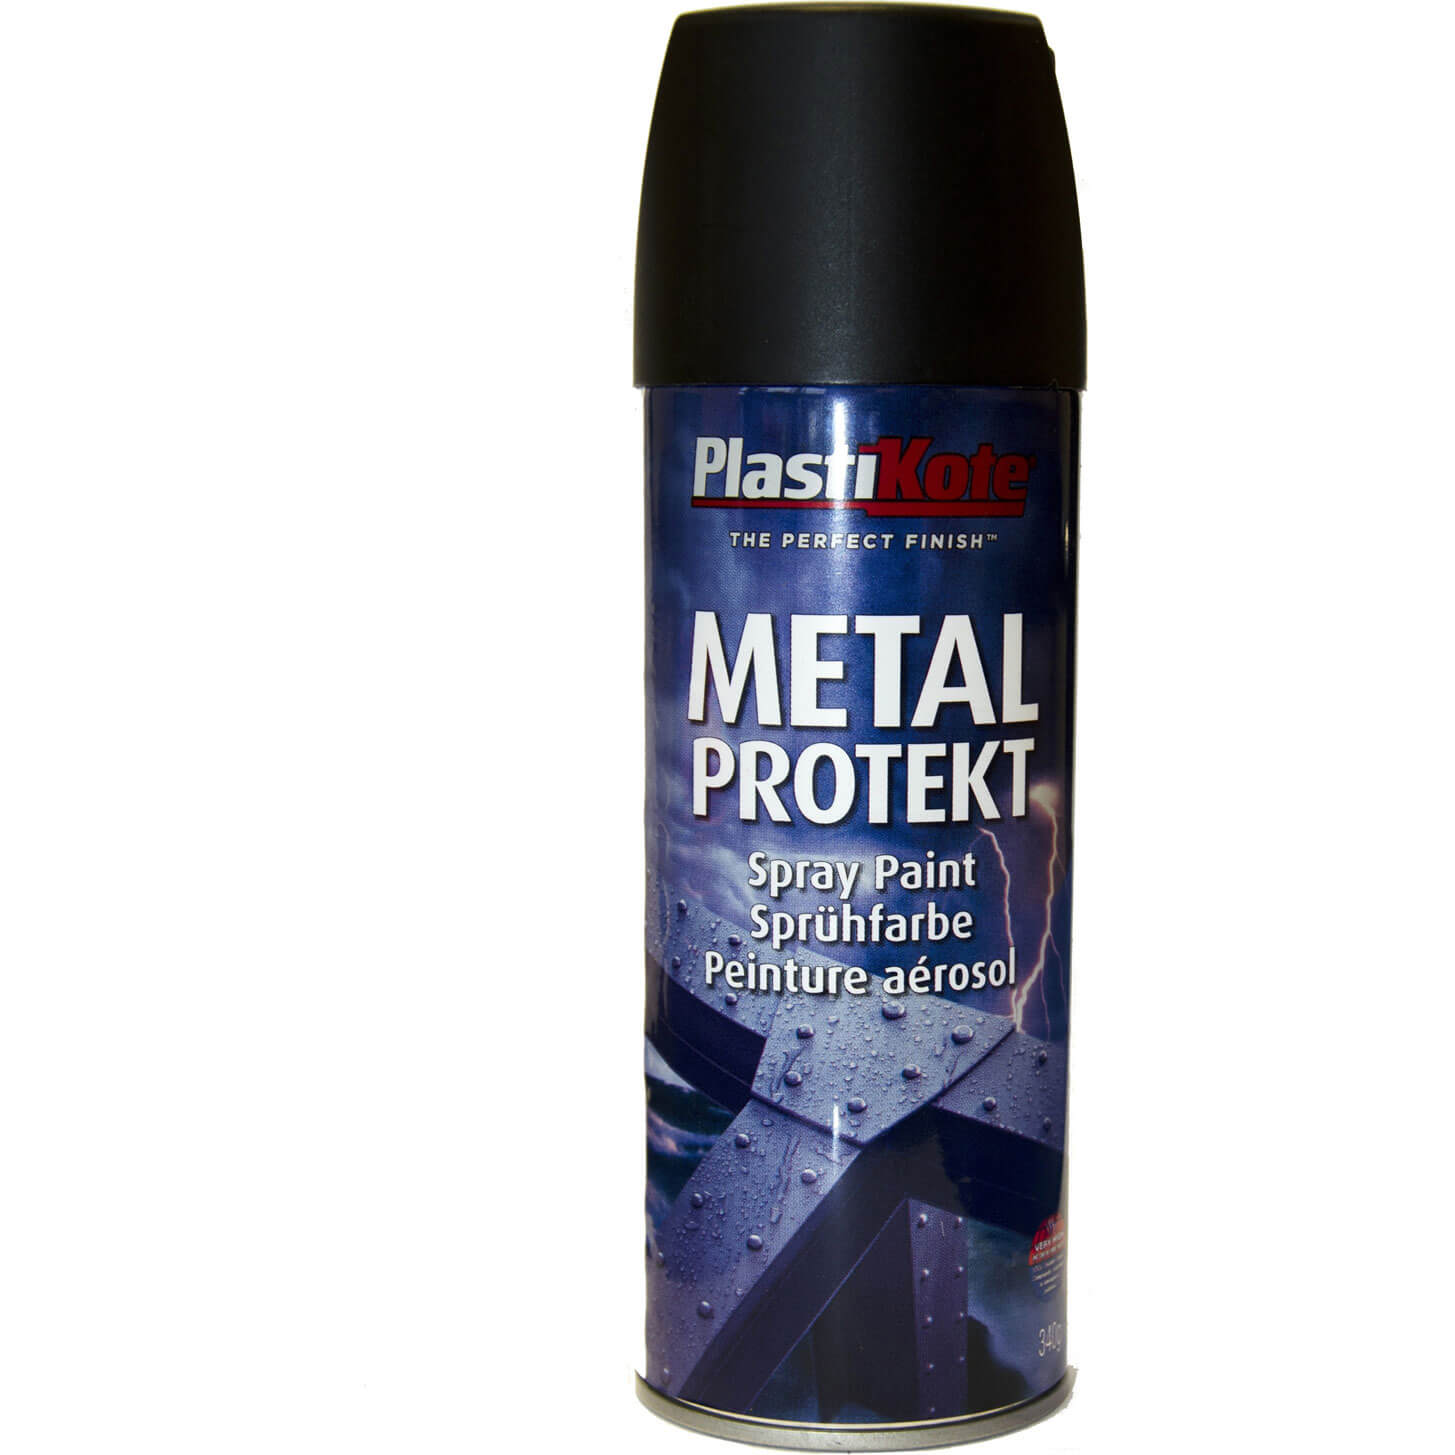 Plastikote Metal Protekt Aerosol Spray Paint Matt Black 400ml